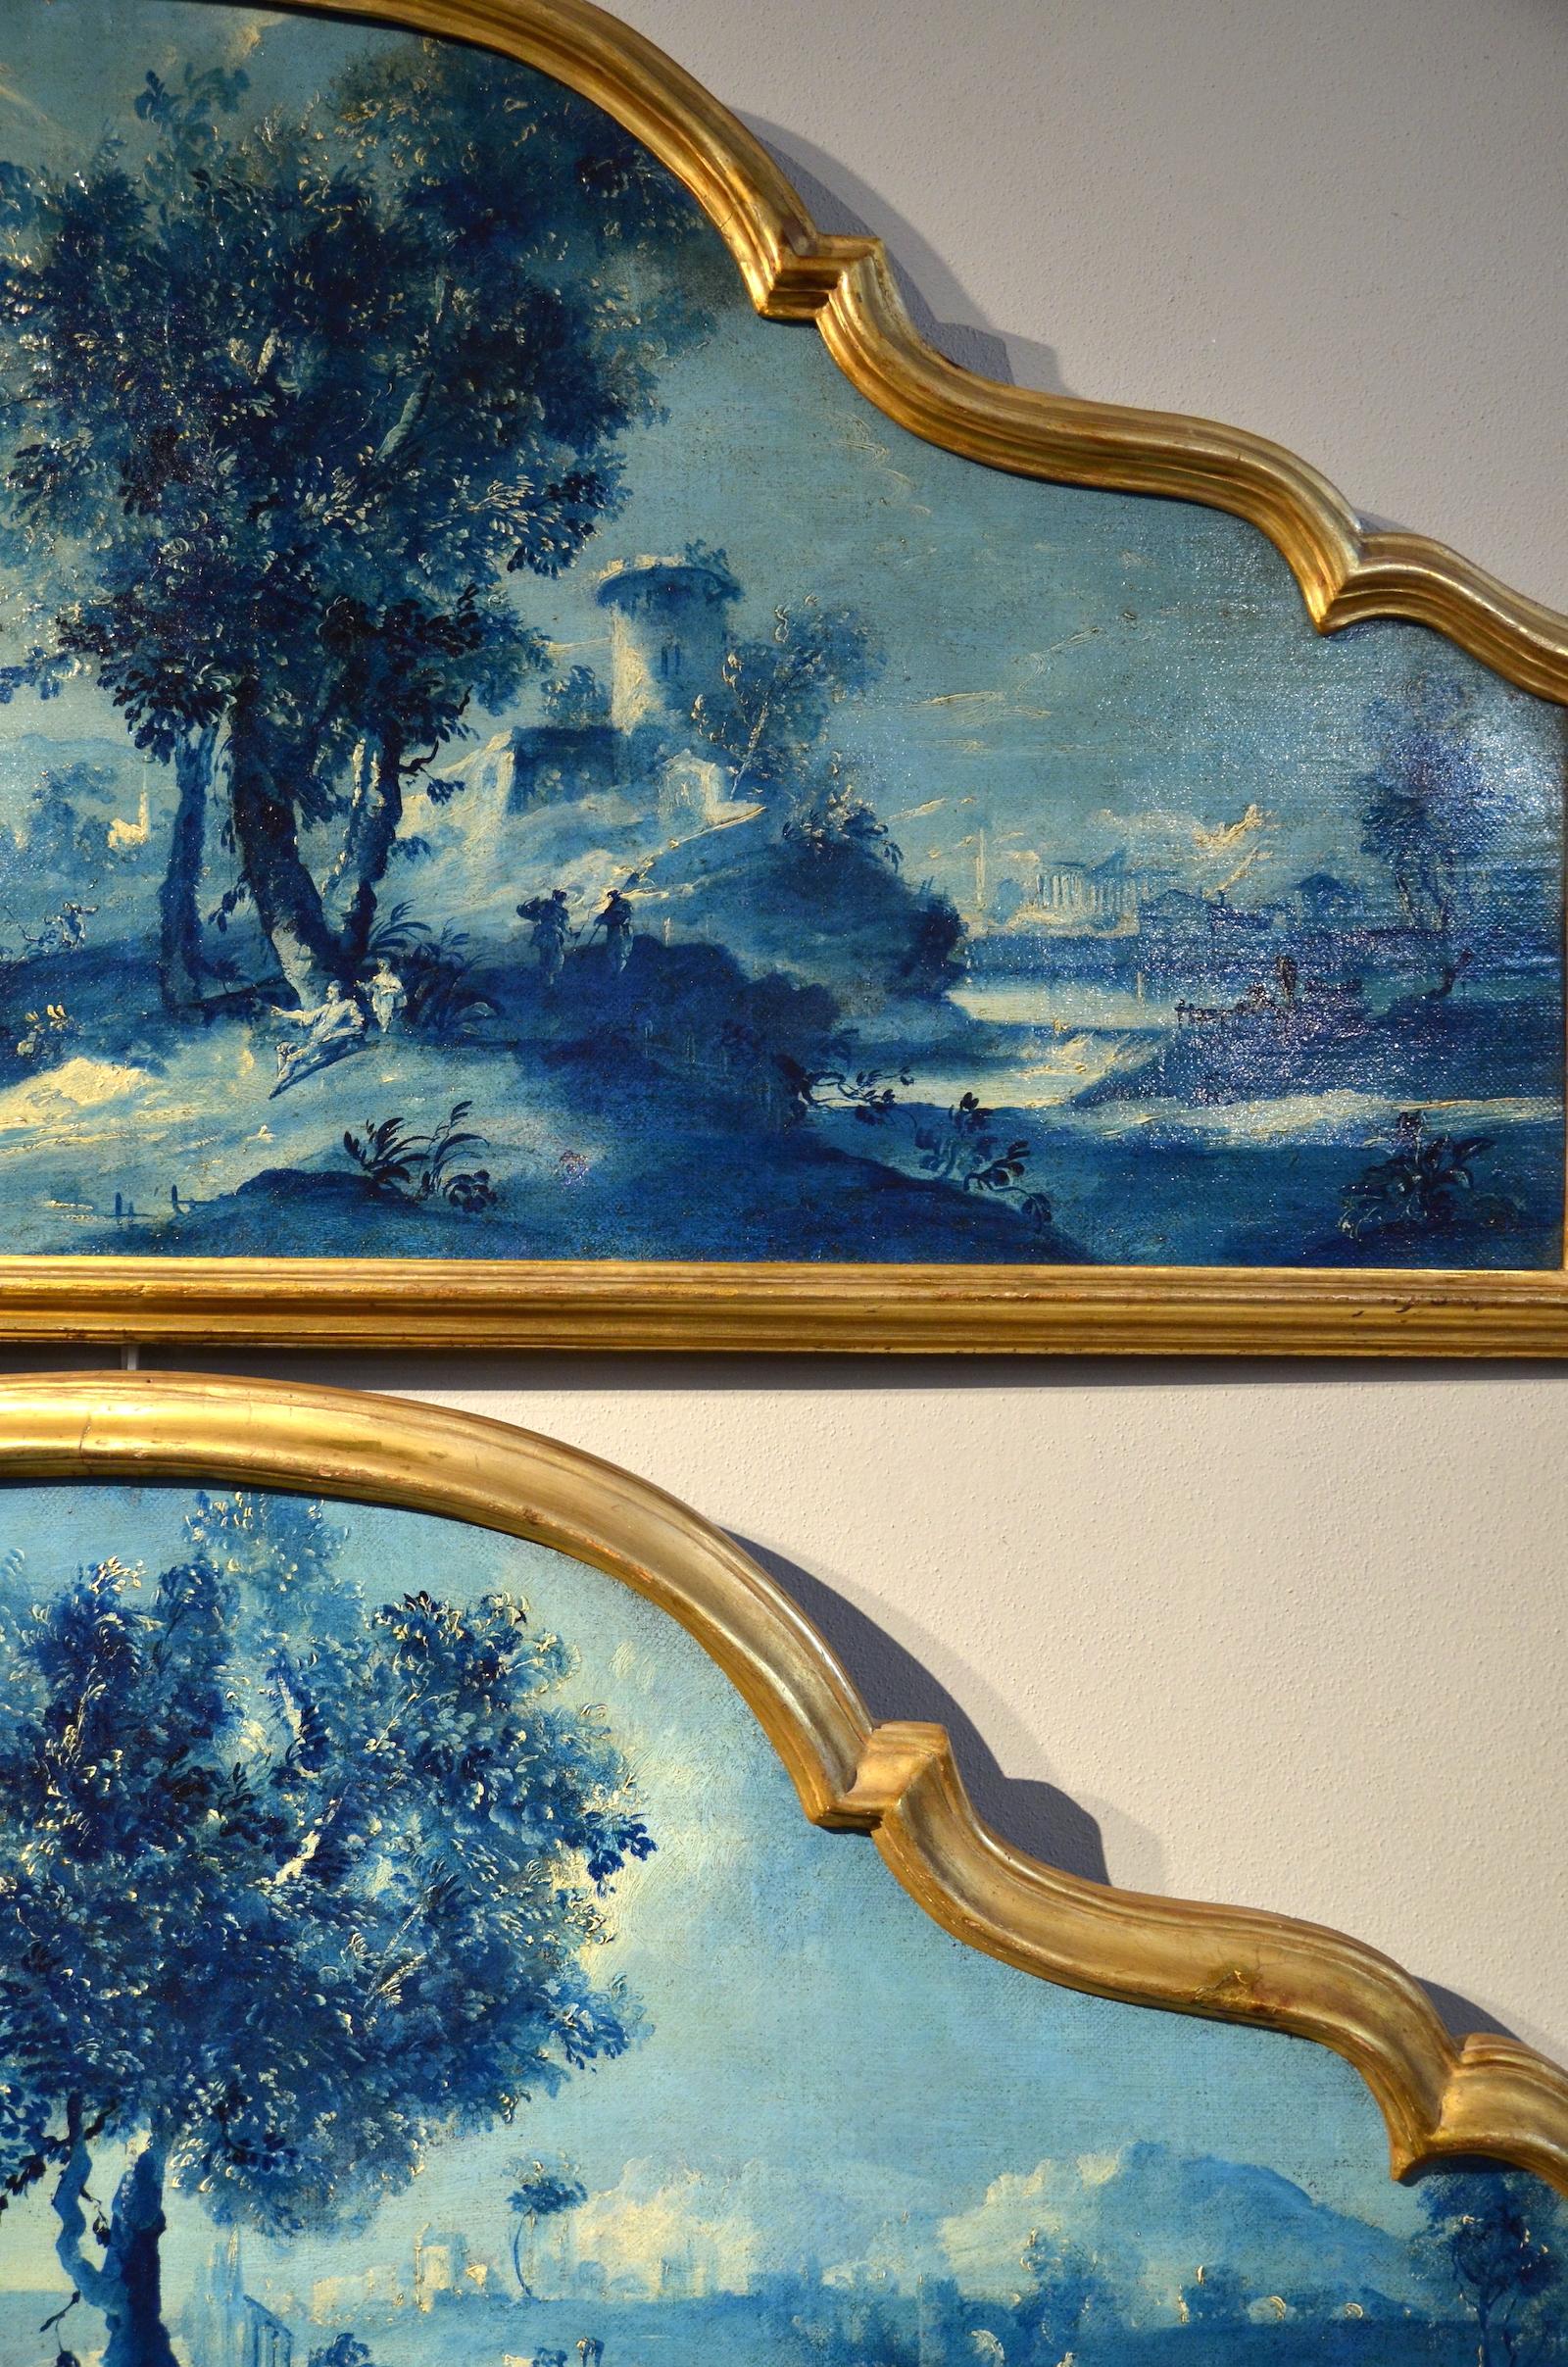 Paint Oil on canvas Pair Landscape Wood See Lake Venezia Italy Baroque Ricci Art 11